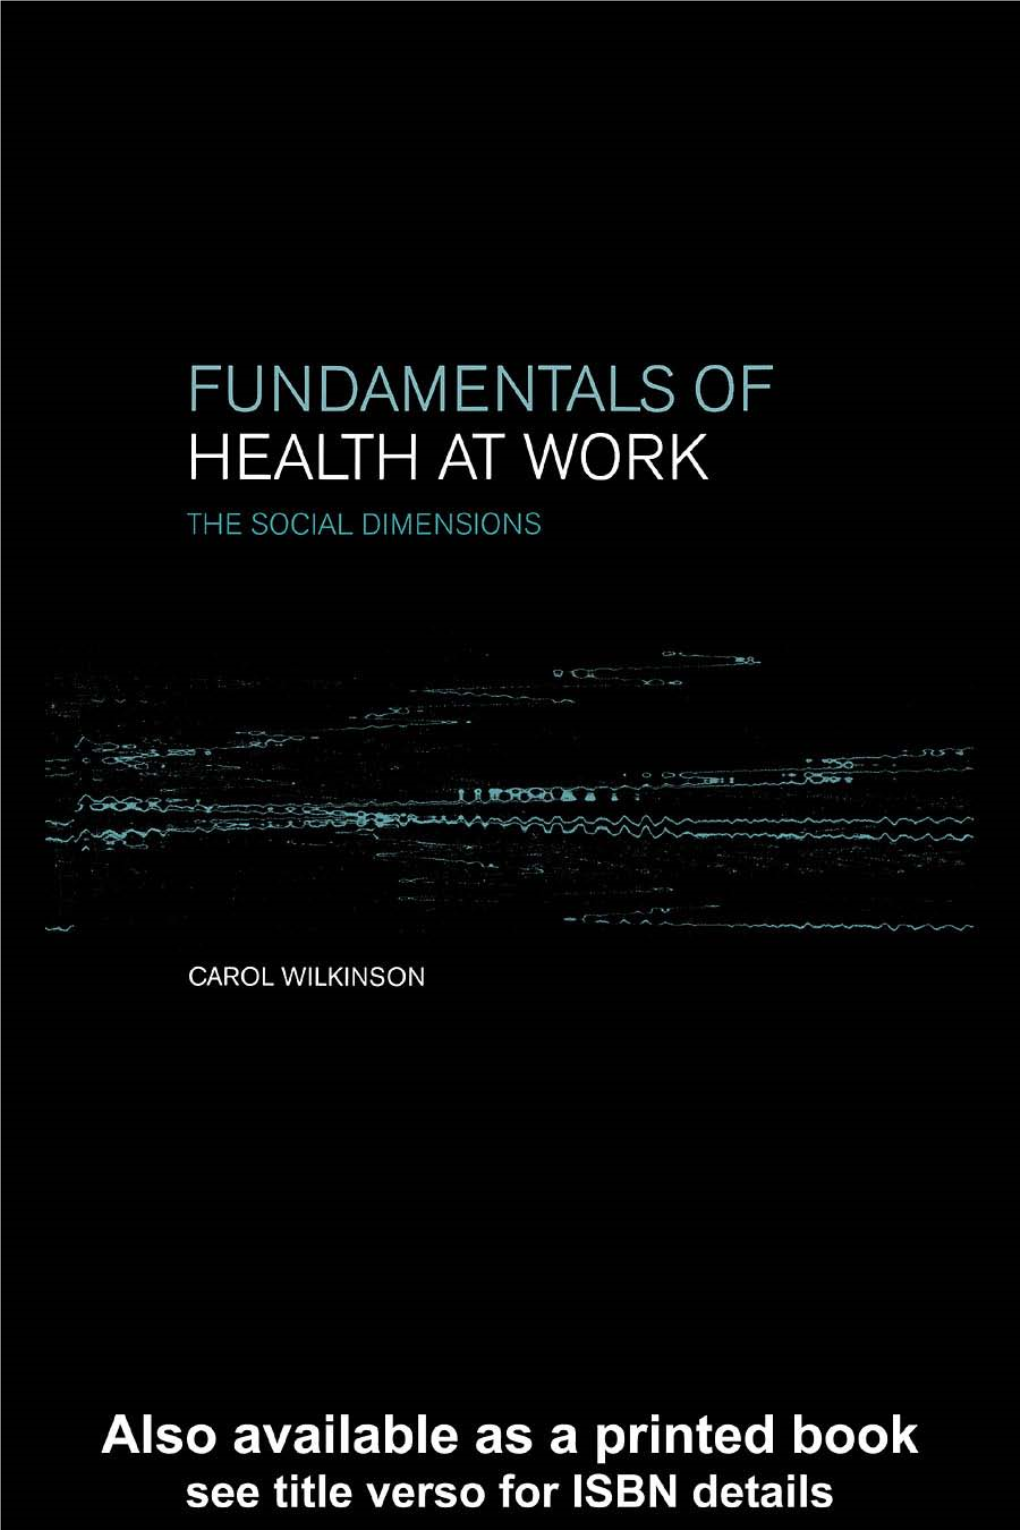 Fundamentals of Health at Work: the Social Dimensions/Carol Wilkinson